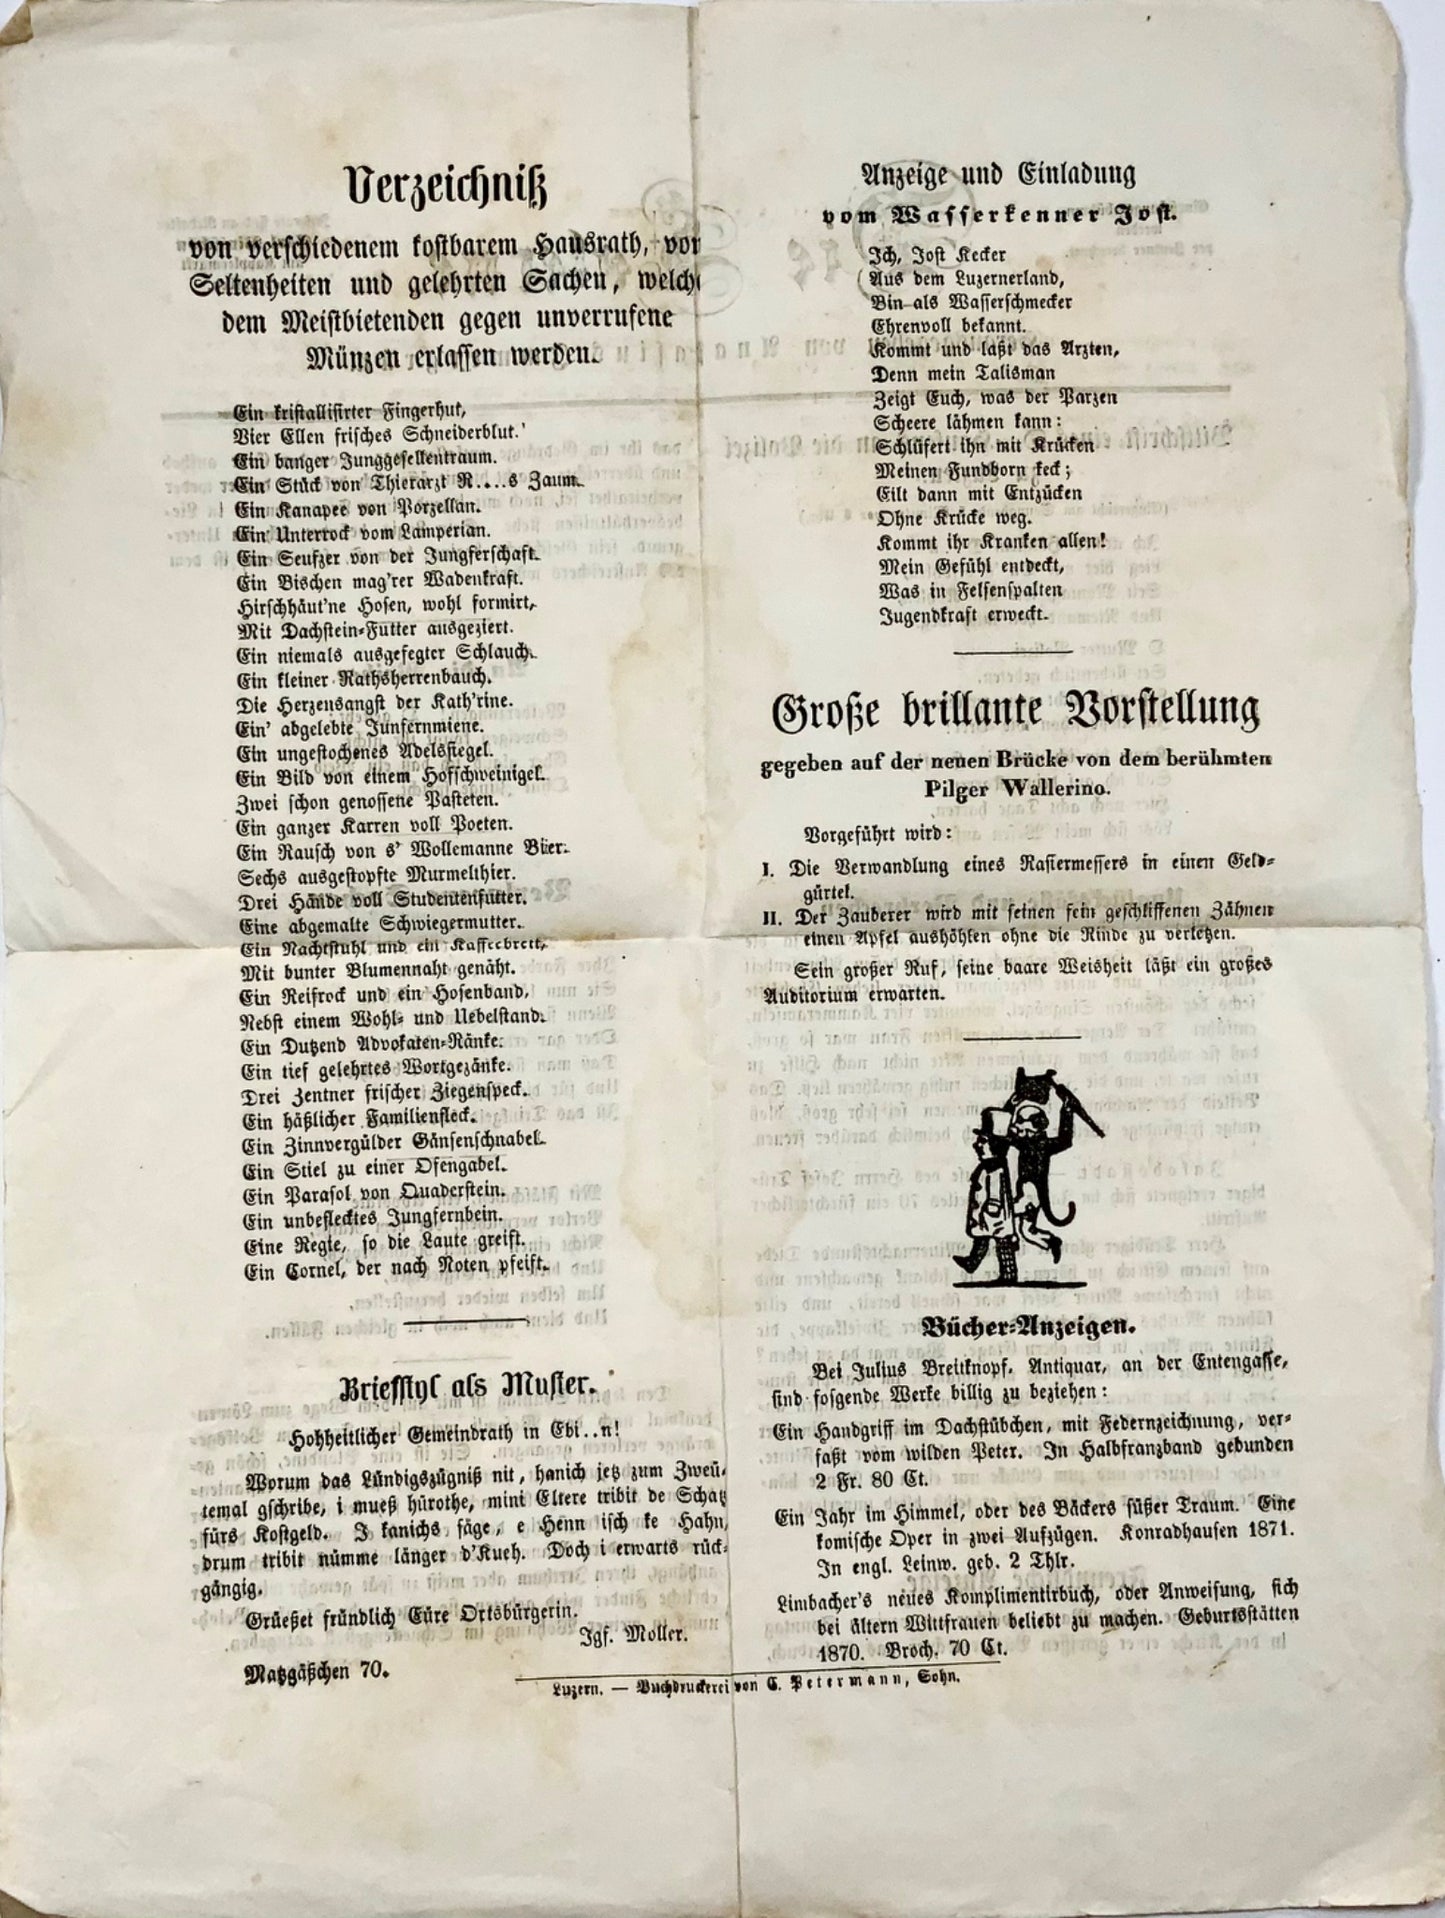 1871 Carnival newspaper ‘Die Laterne”, Lucerne, Switzerland